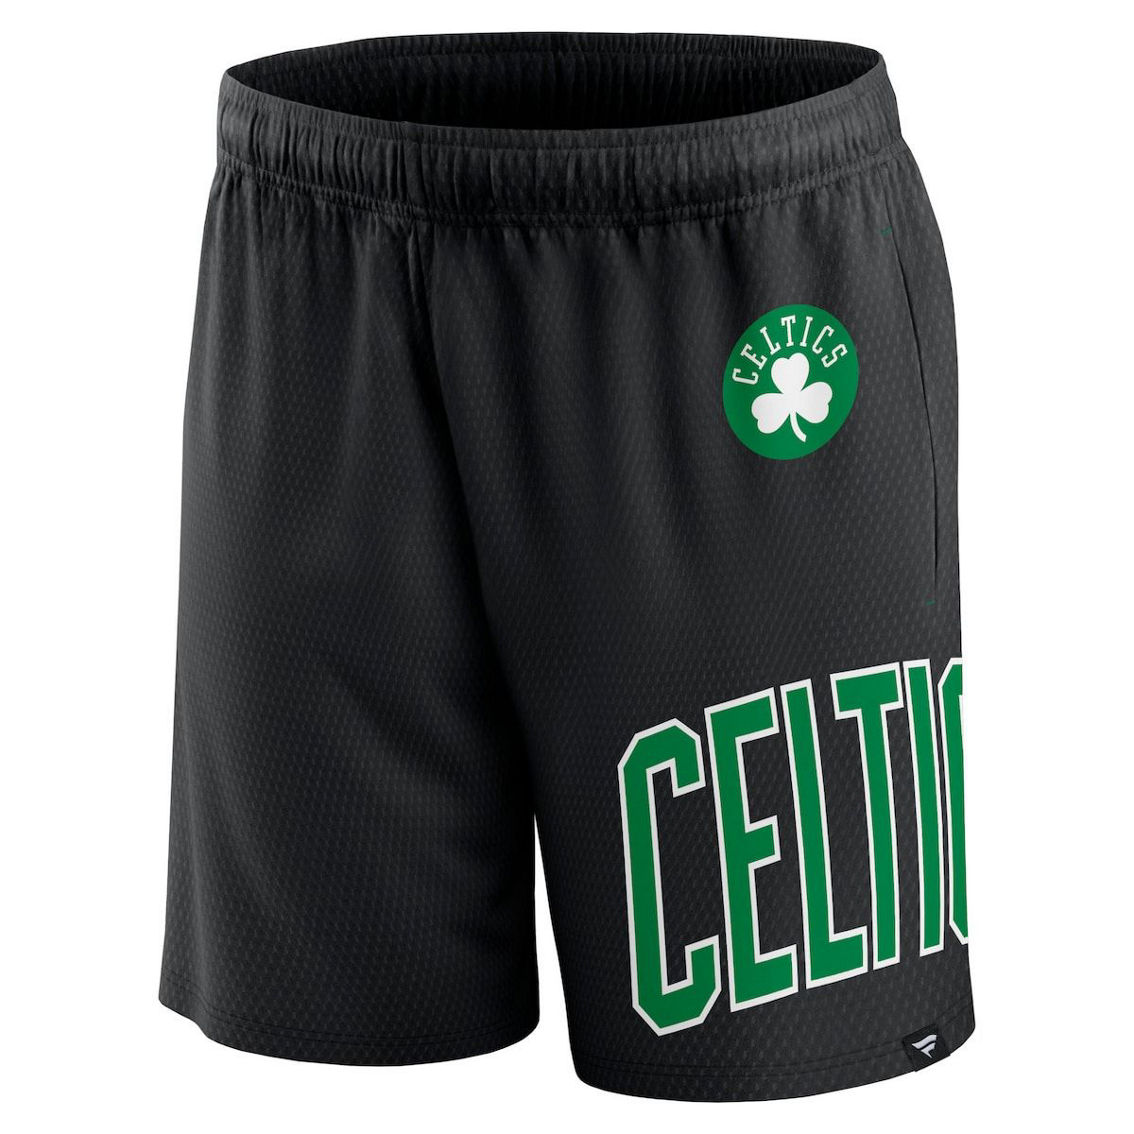 Fanatics Branded Men's Black Boston Celtics Free Throw Mesh Shorts - Image 3 of 4